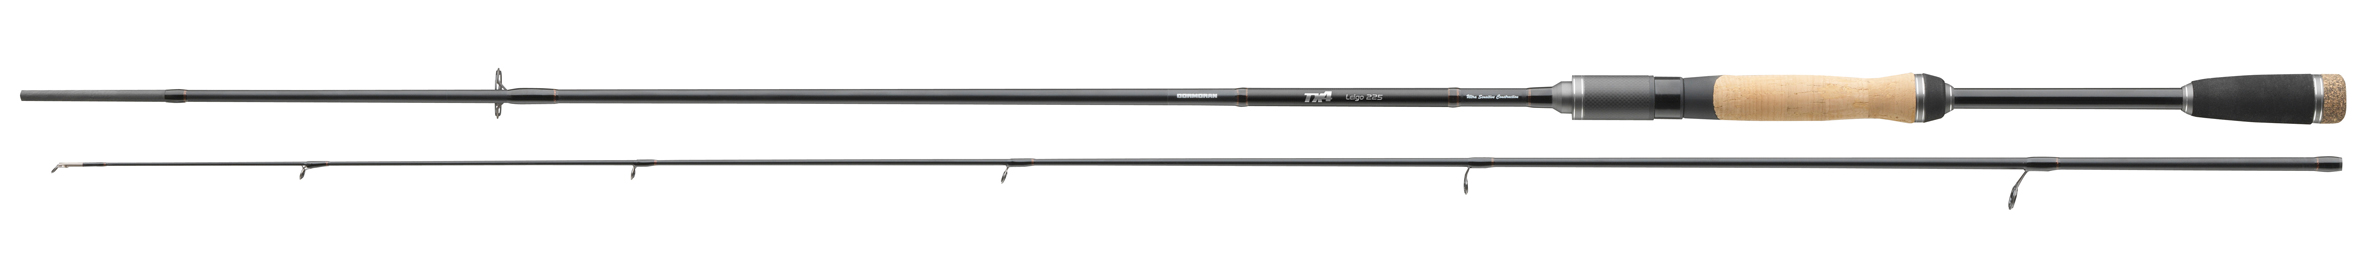 Удилище TX-4 LEIGO (Cormoran), 2.25м, 3-15г